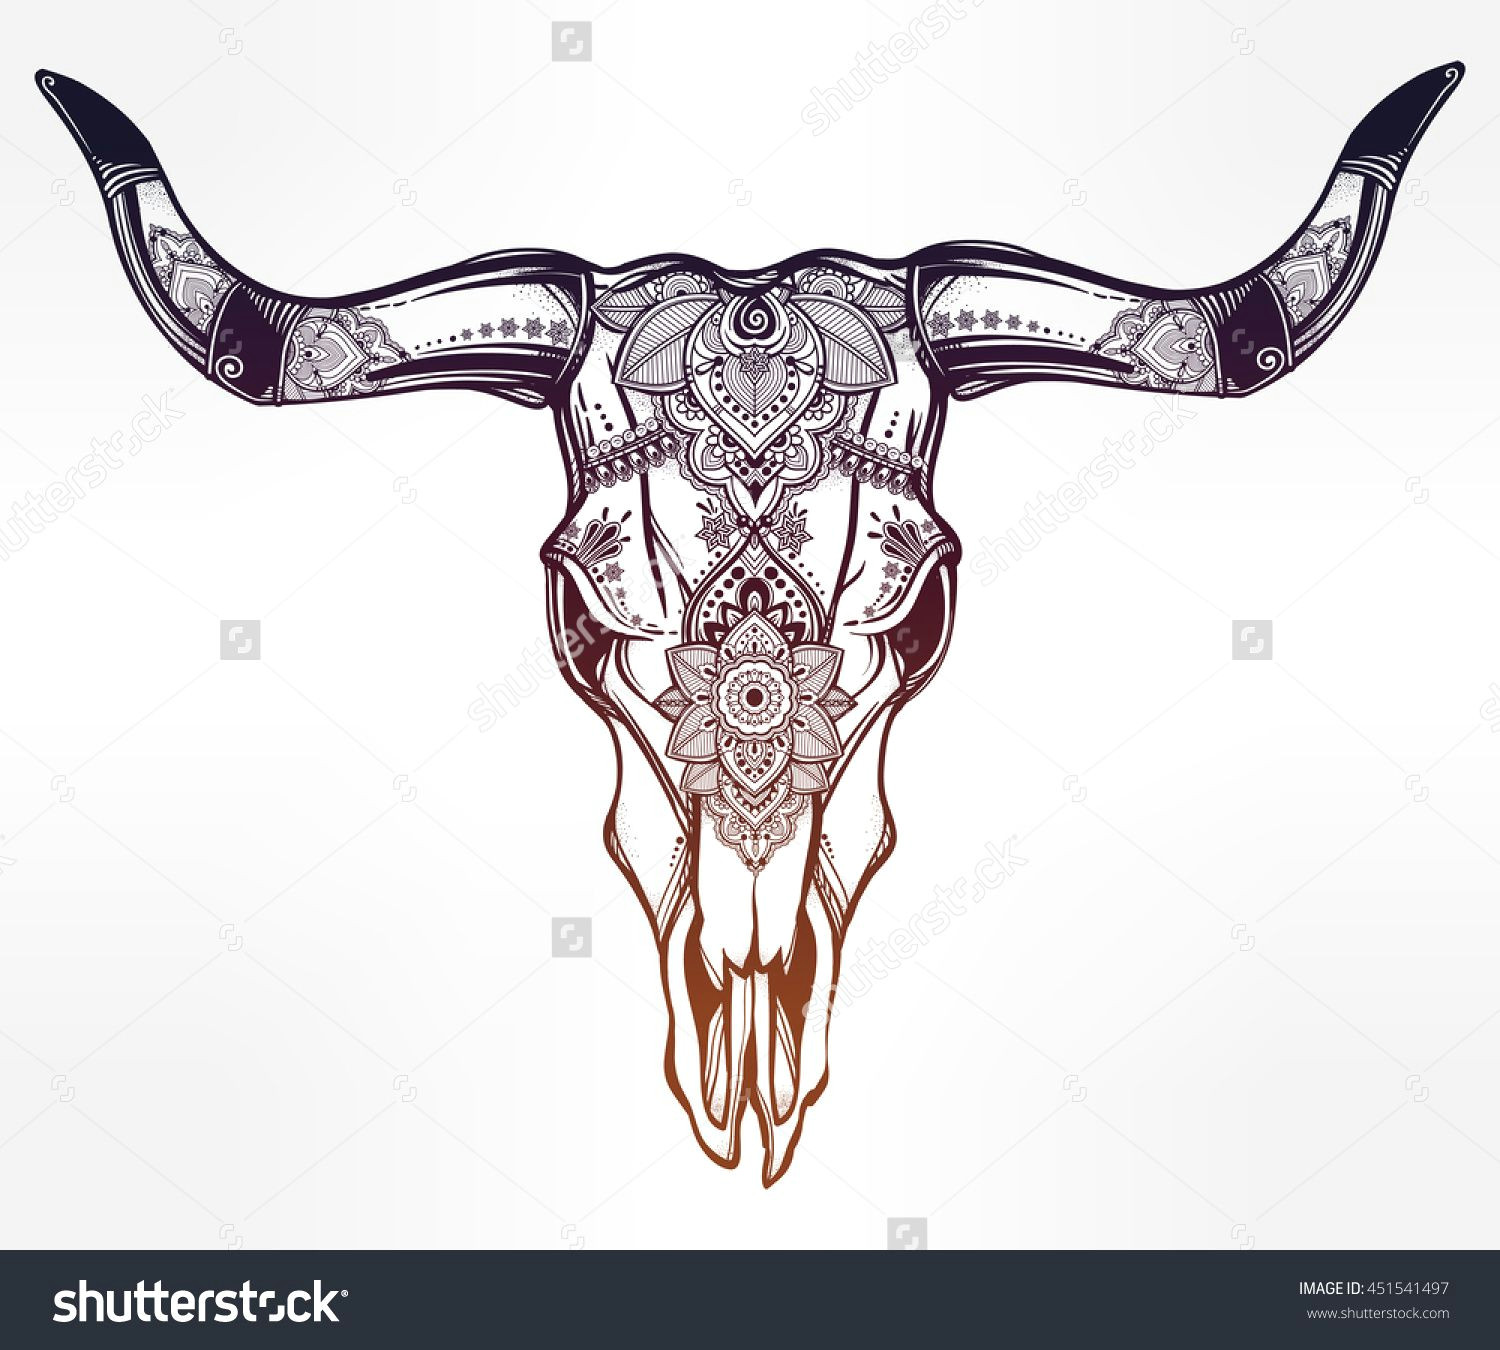 hand drawn romantic tattoo style ornate decorative desert cow or buffalo skull spiritual native indian navajo art vector illustration isolated